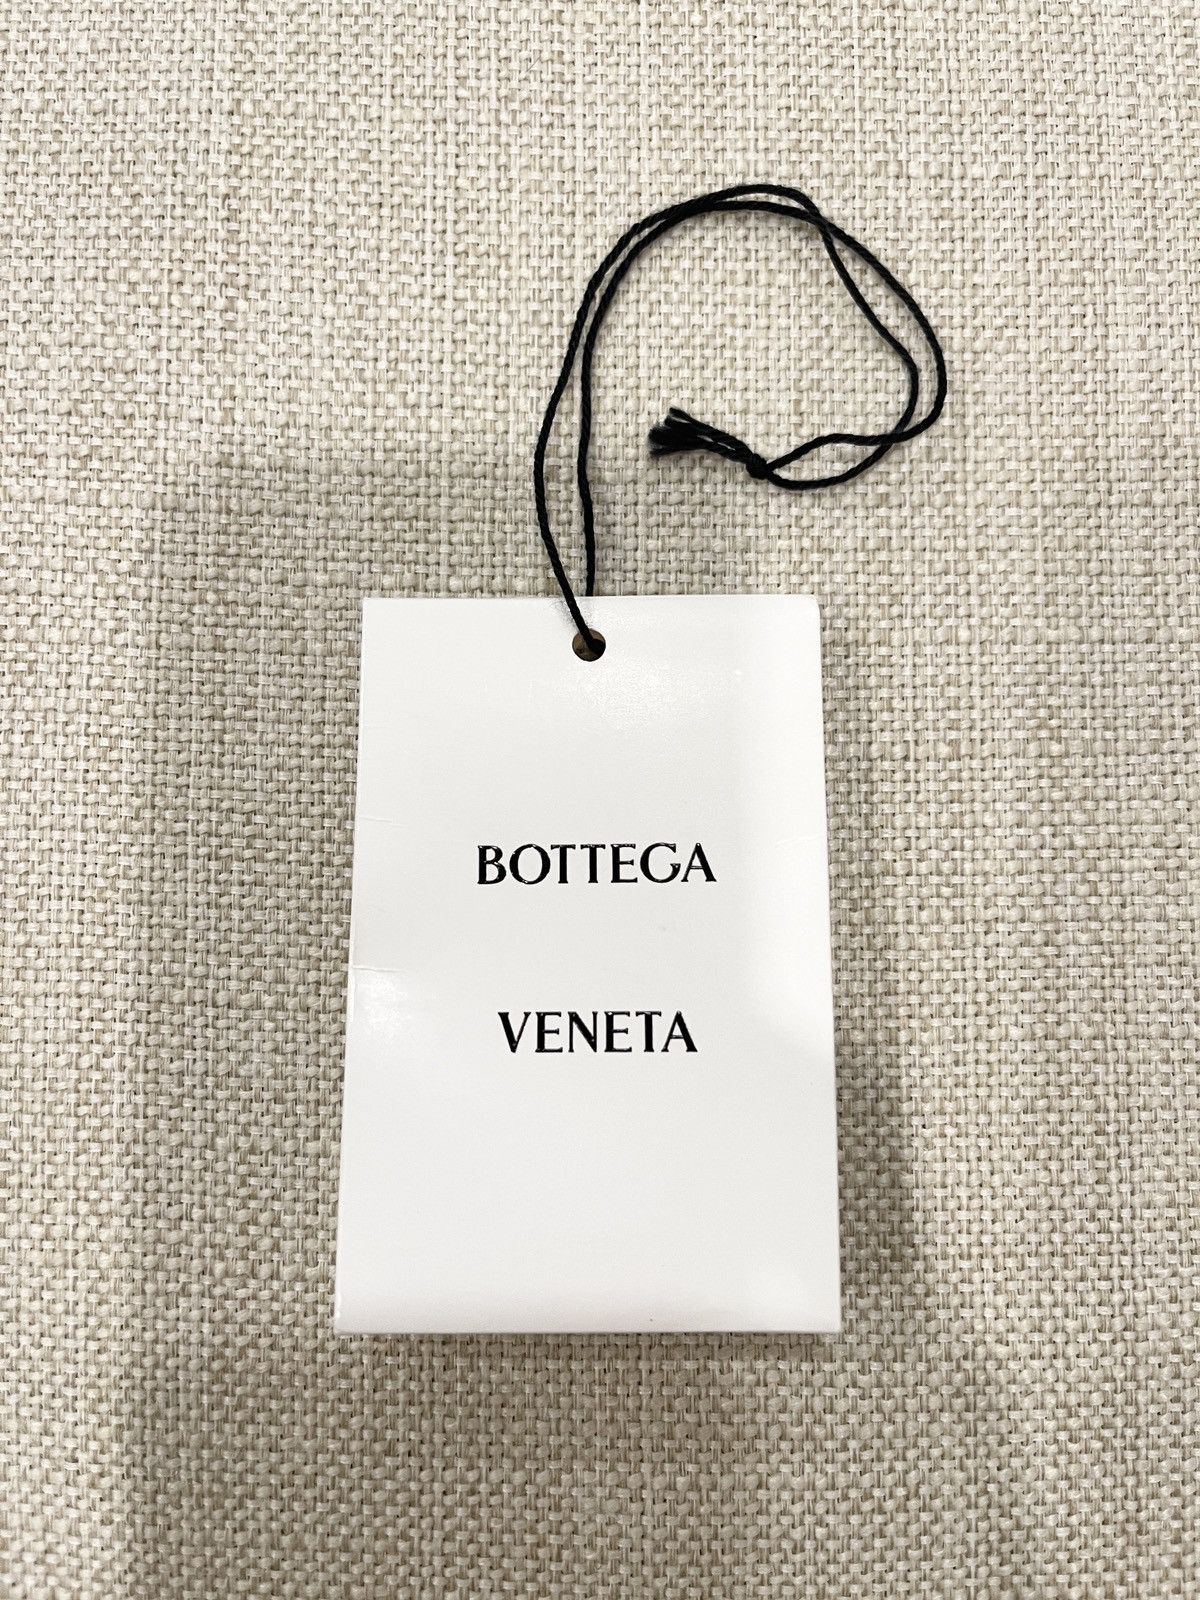 Bottega Veneta VIP Souvenir Gift Two Buttons Pack - 3